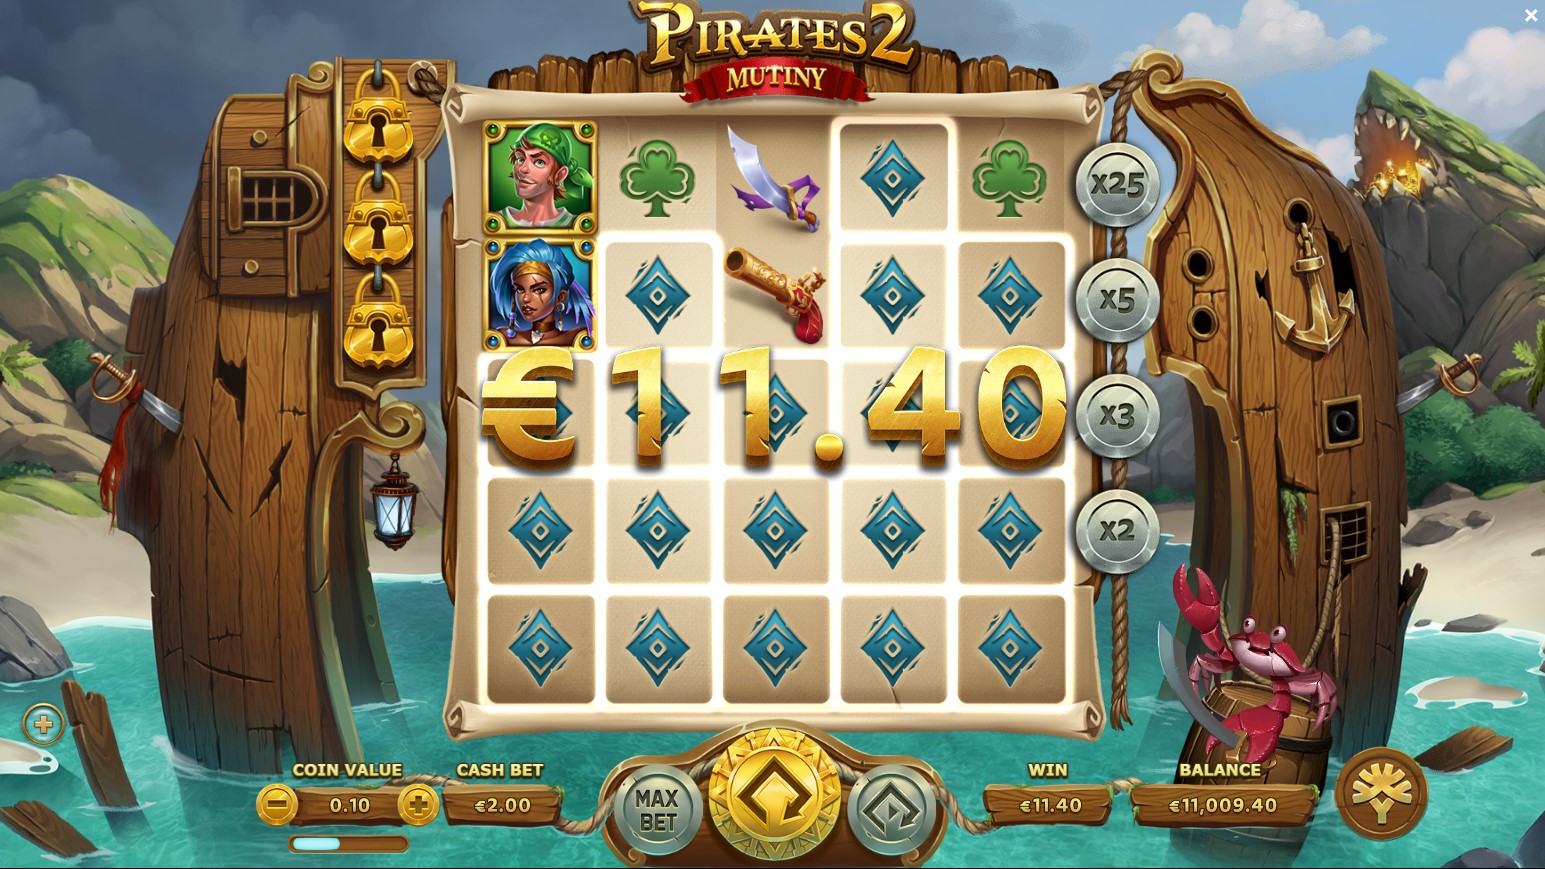 Pirates 2 Mutiny 2 Yggdrasil